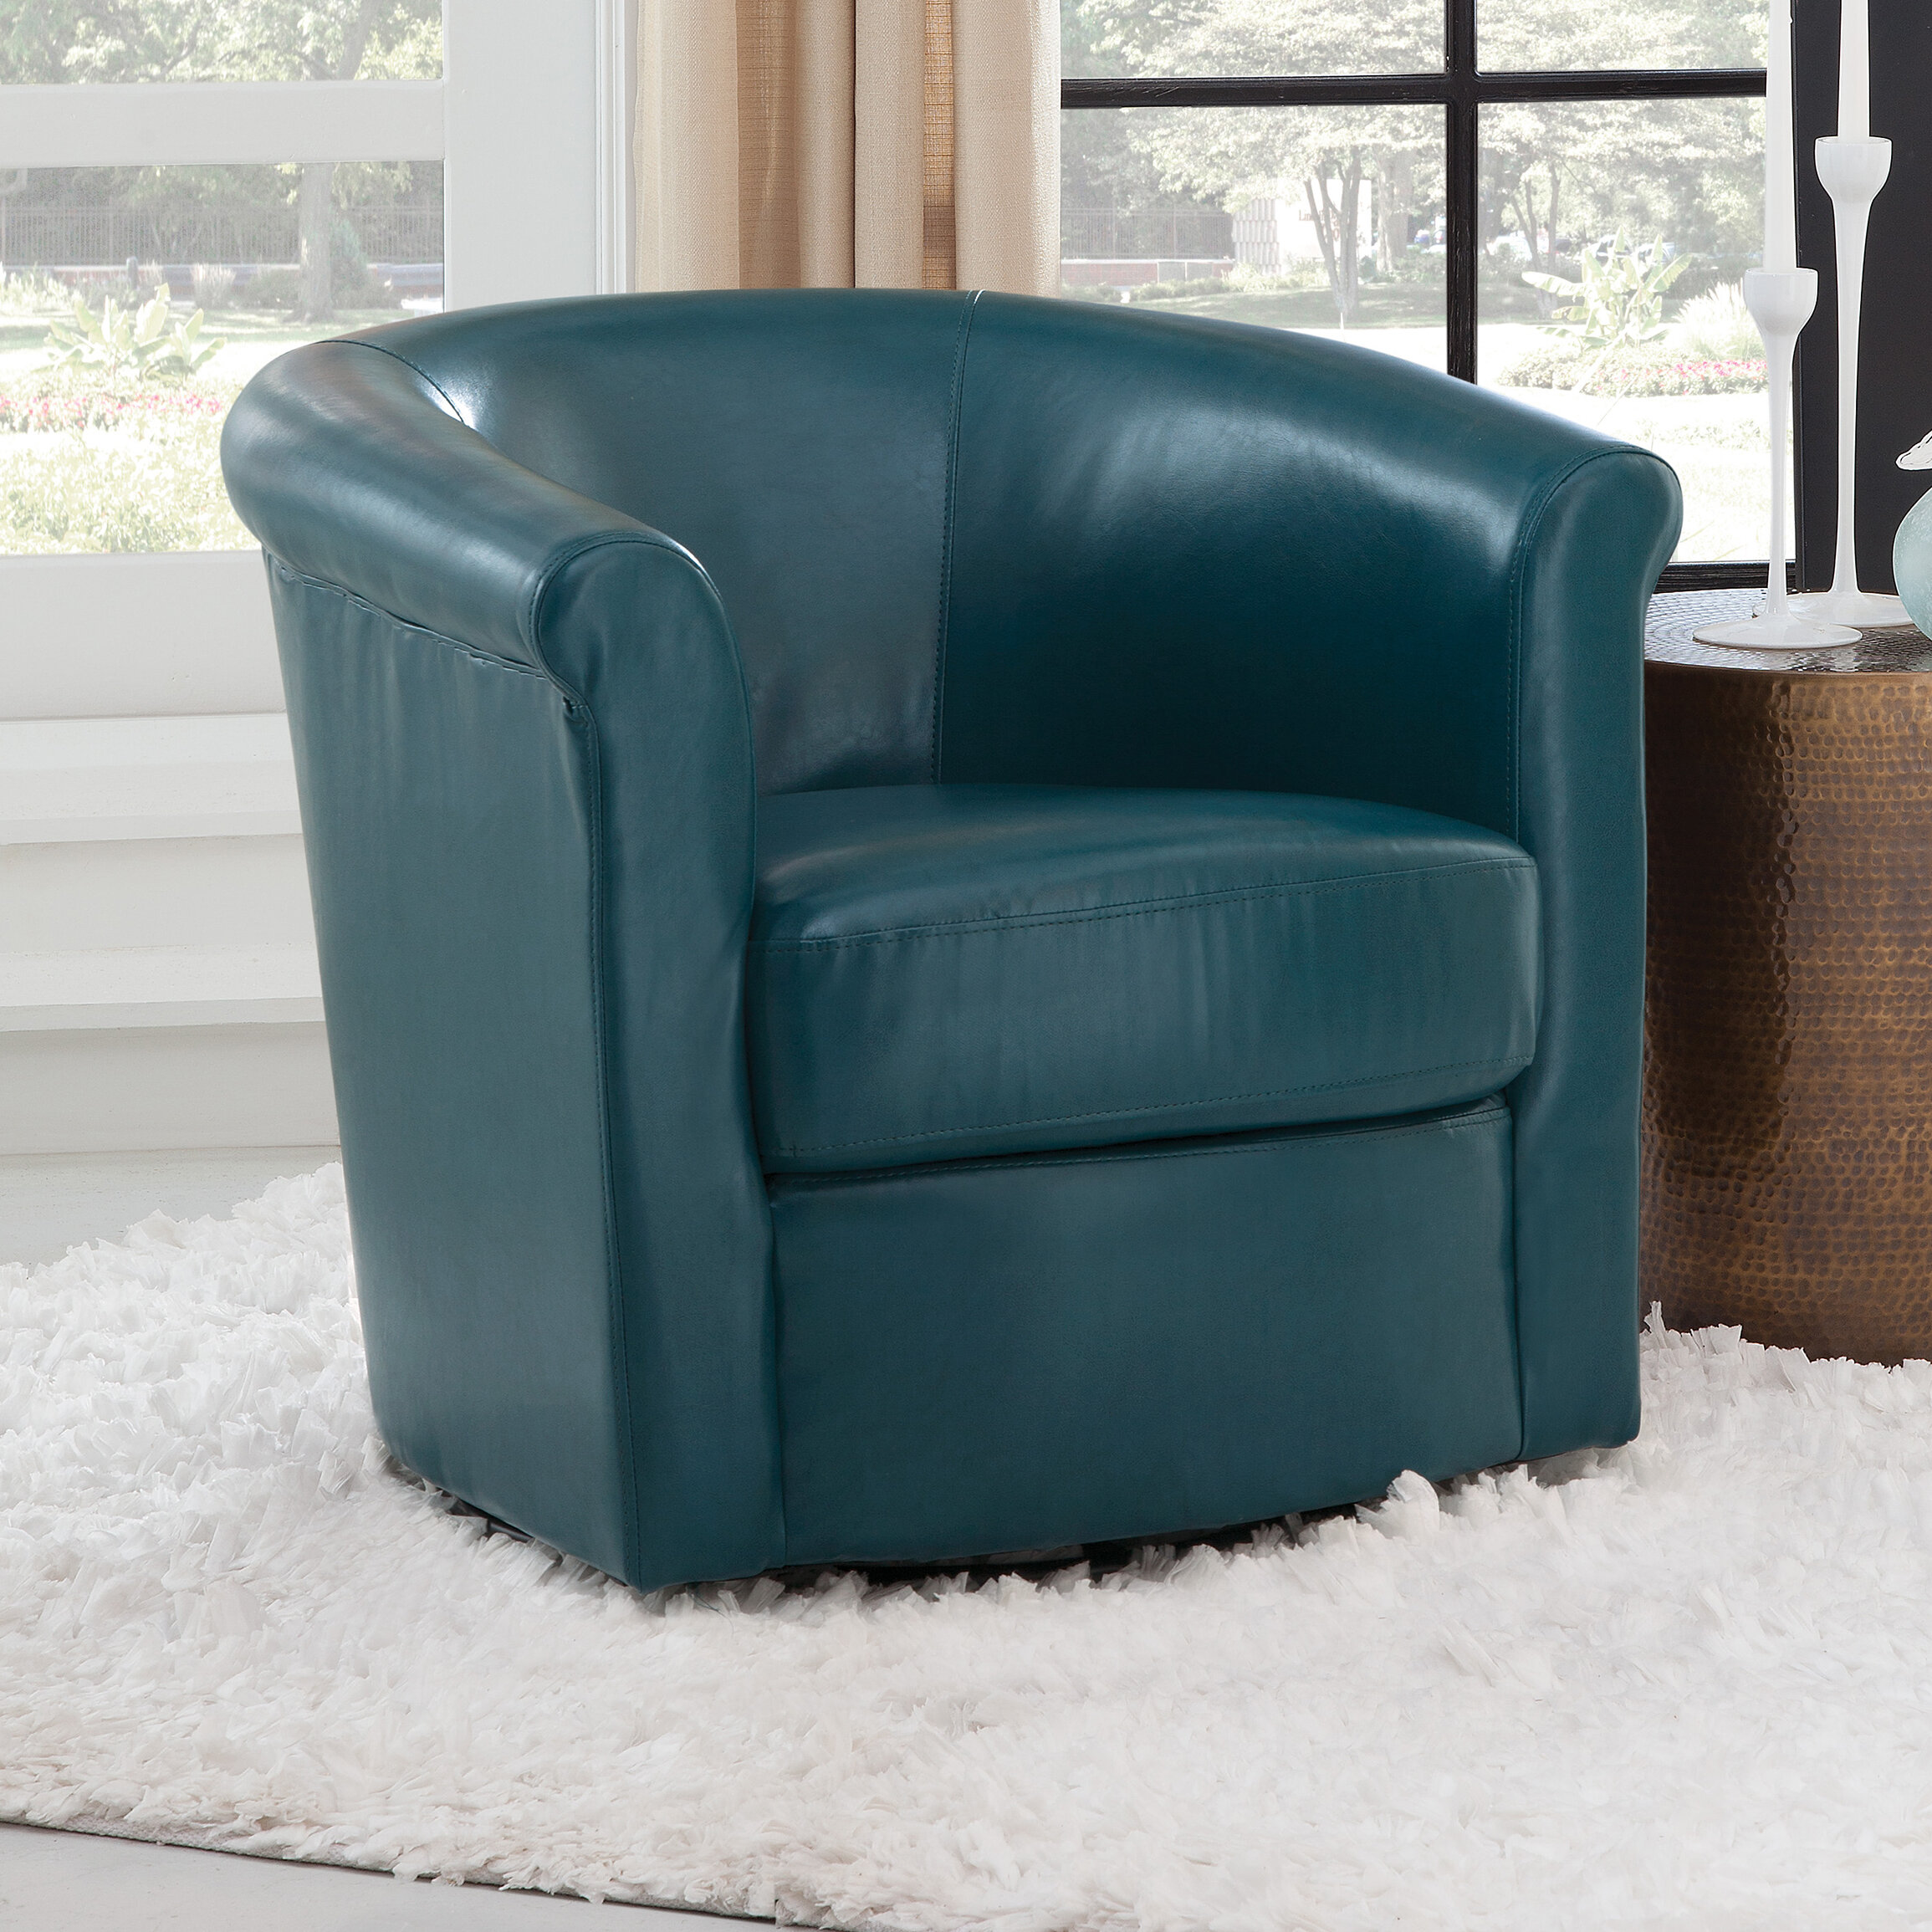 Pinehill 29” Wide Swivel Barrel Chair